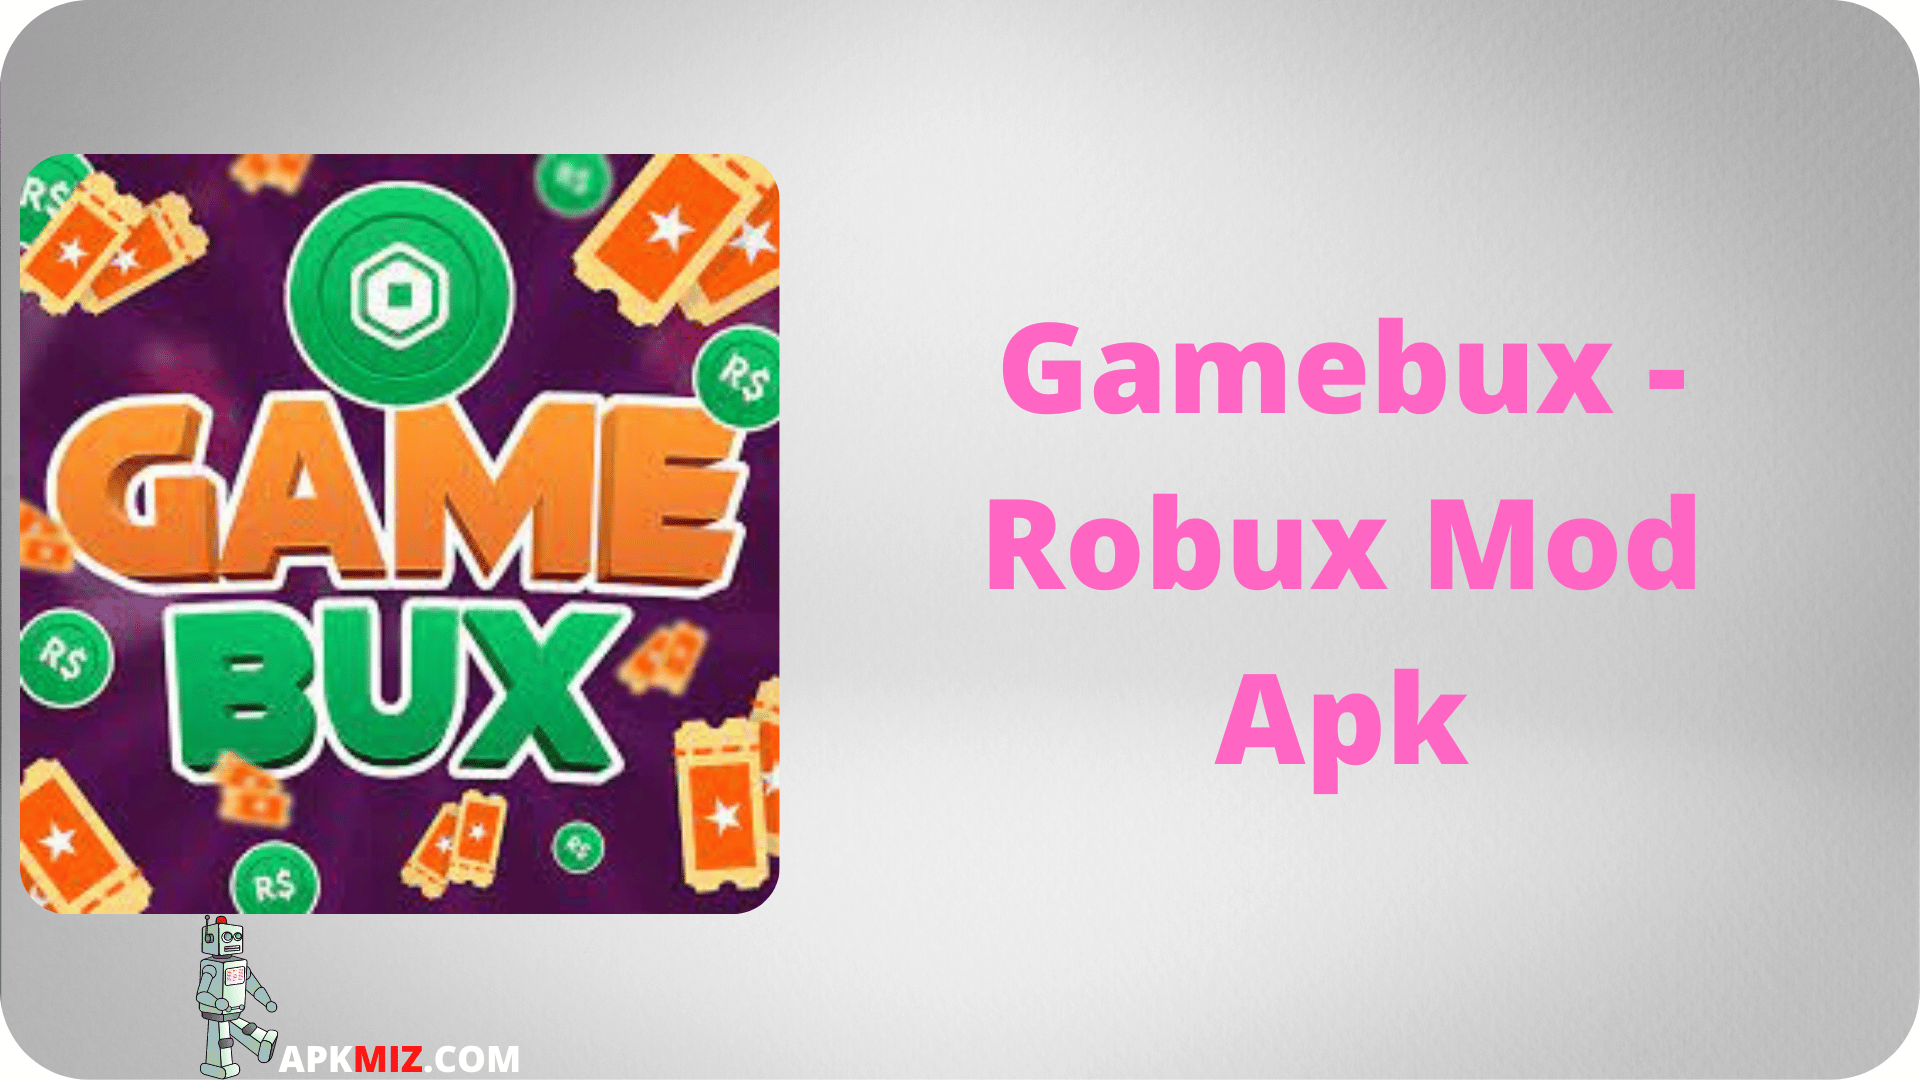 Gamebux - Robux Mod Apk